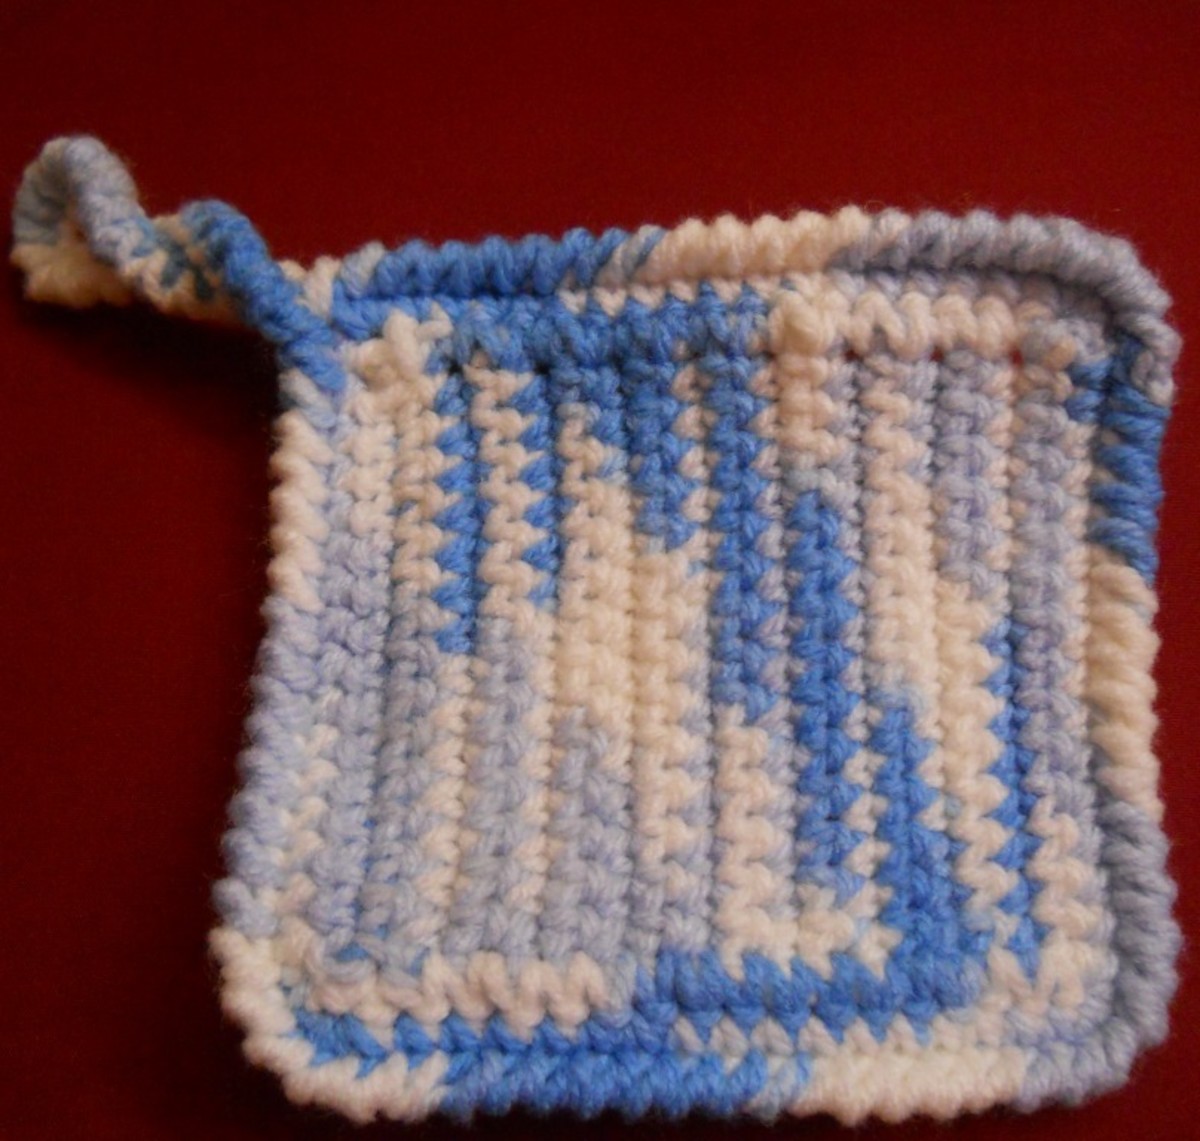 Crochet DILLY DALLY Dishcloth Free Pattern #1